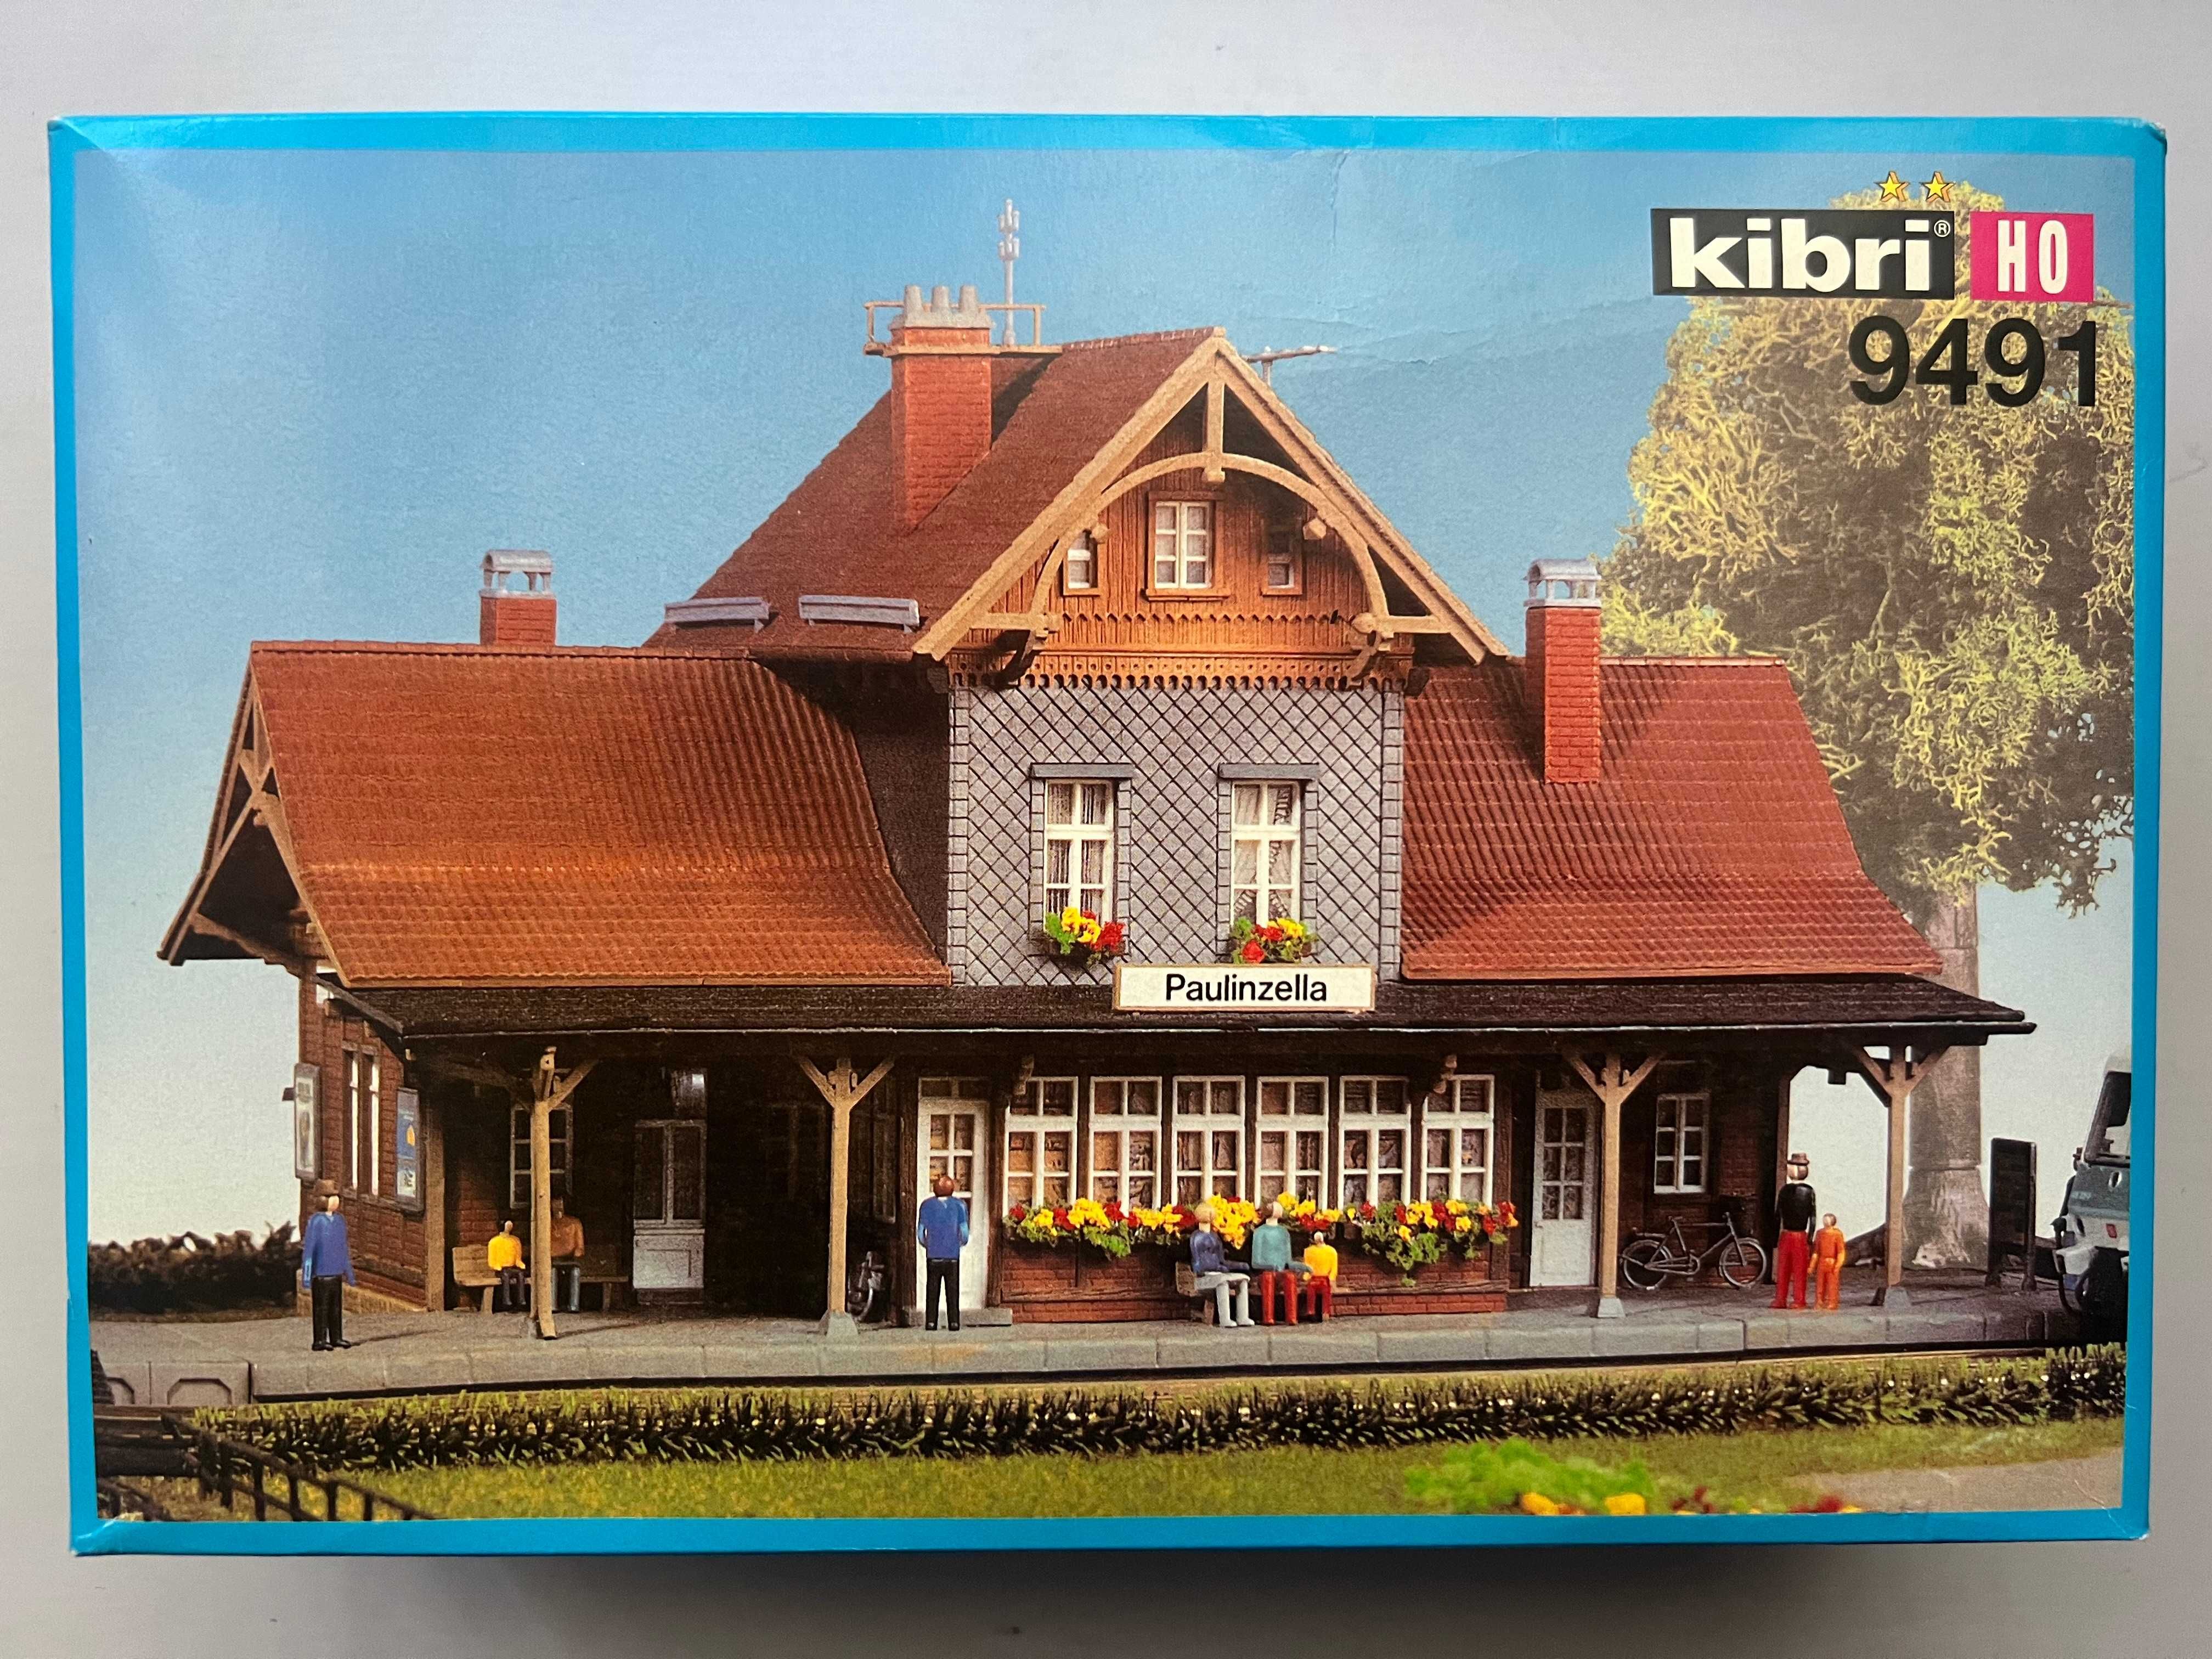 KIBRI 9491 Estação de Comboios Paulinzella, H0 1/87, Kit de Montagem